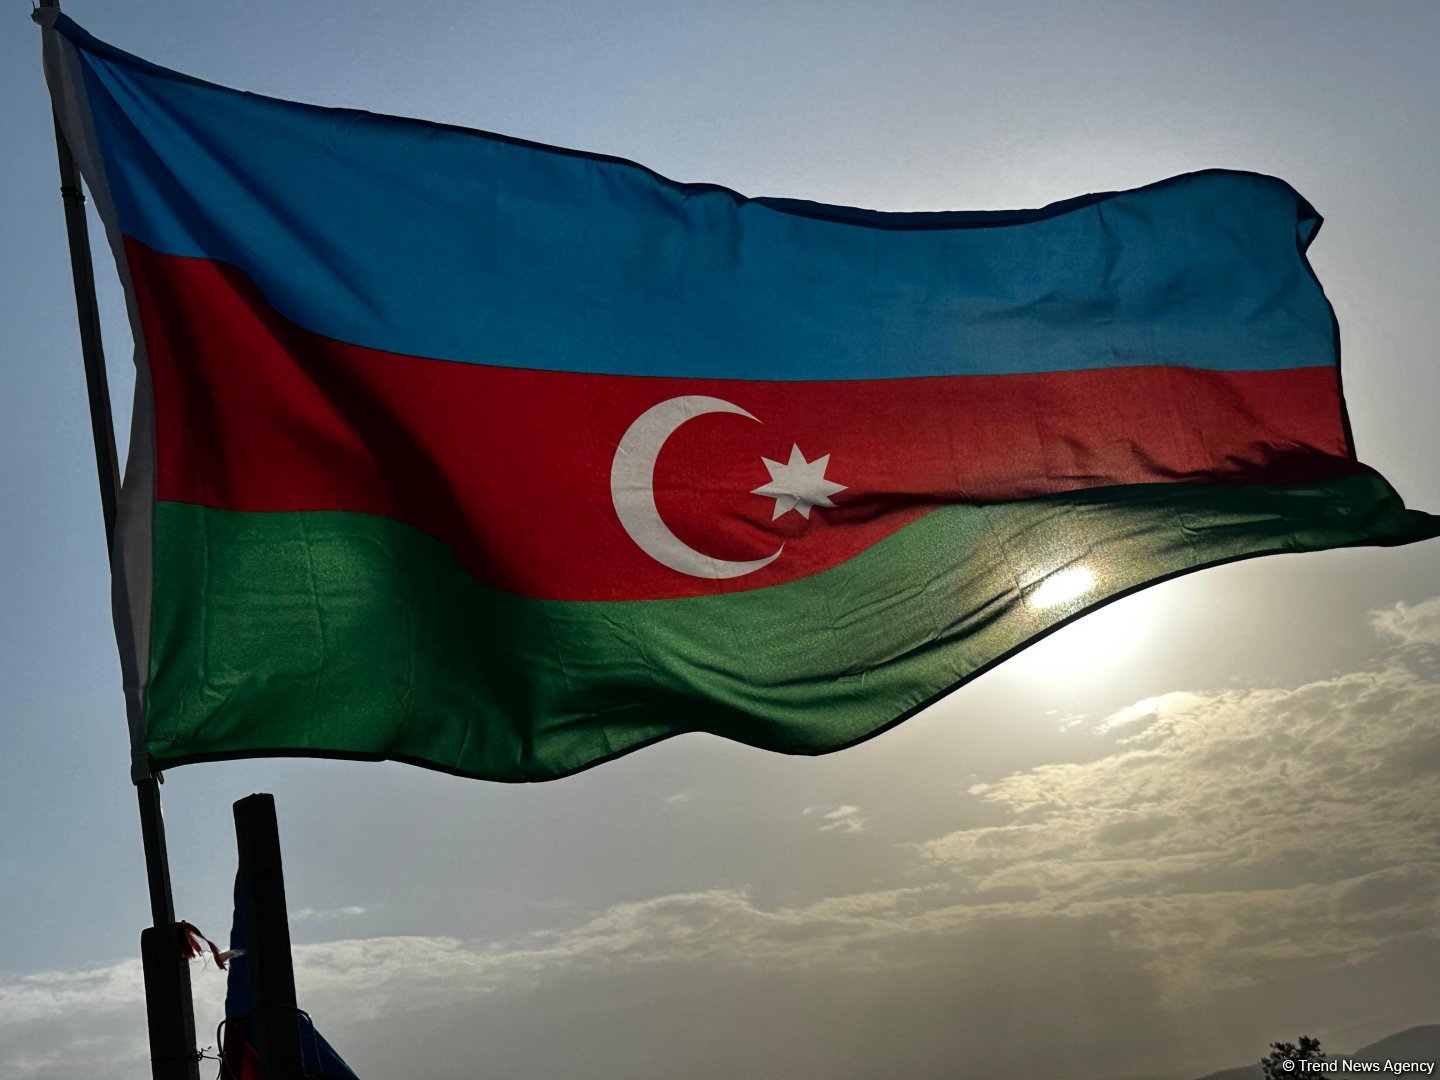 Norwegian travelers' visit to Azerbaijan's Aghdam comes to end (PHOTO)